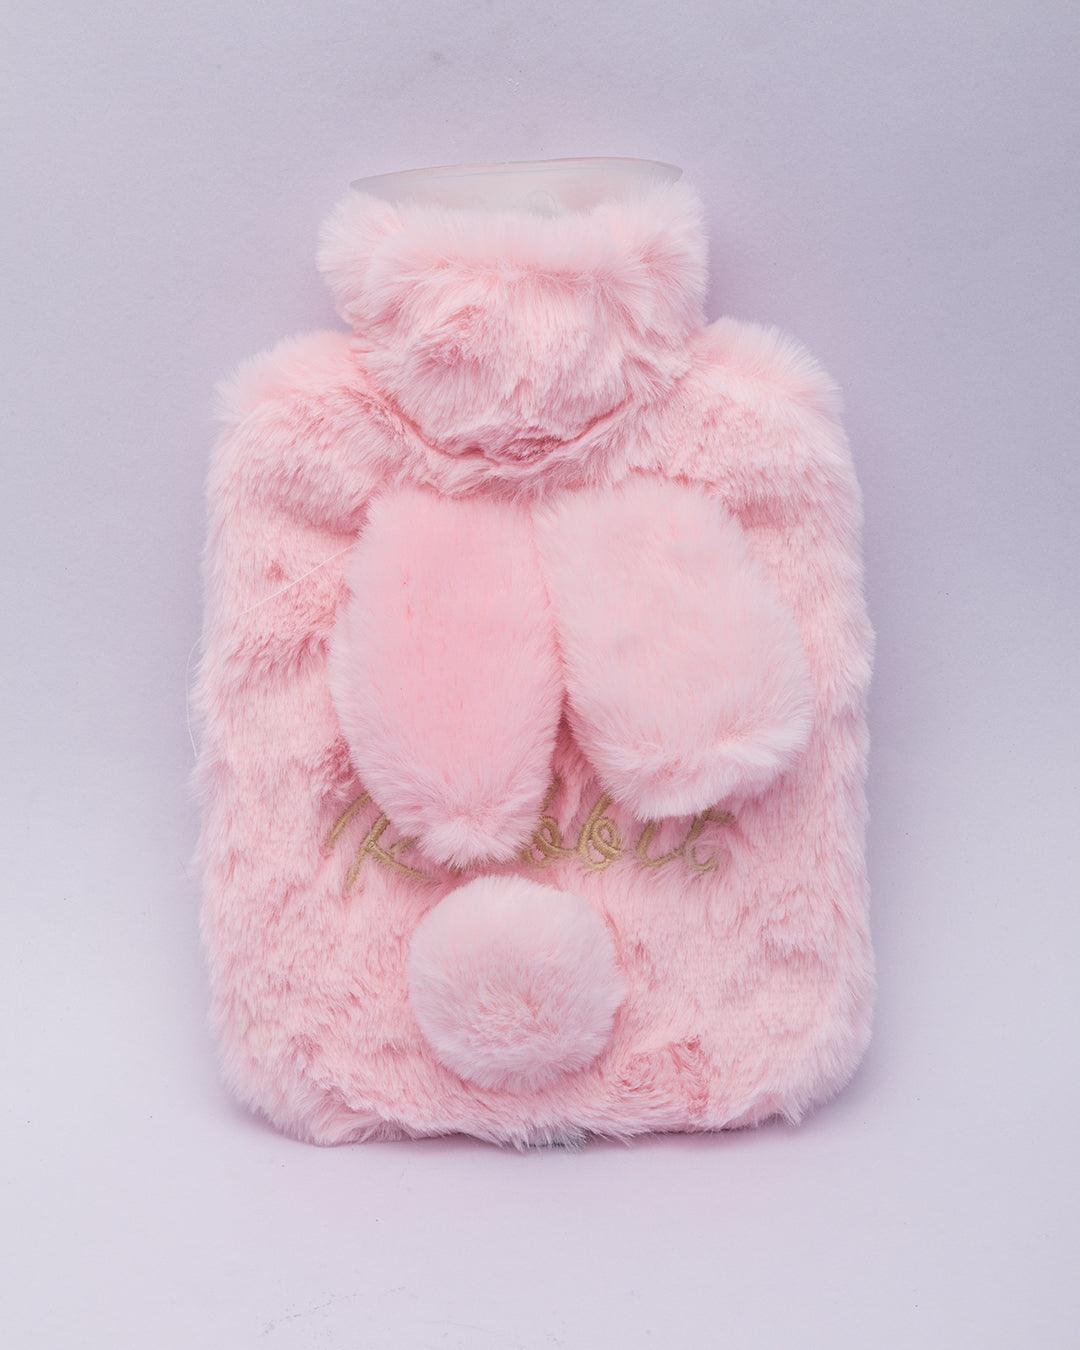 Hot Water Bag, for Pain Relief, Bunny Shaped Design, Pink, Fleece, 850 mL - MARKET 99